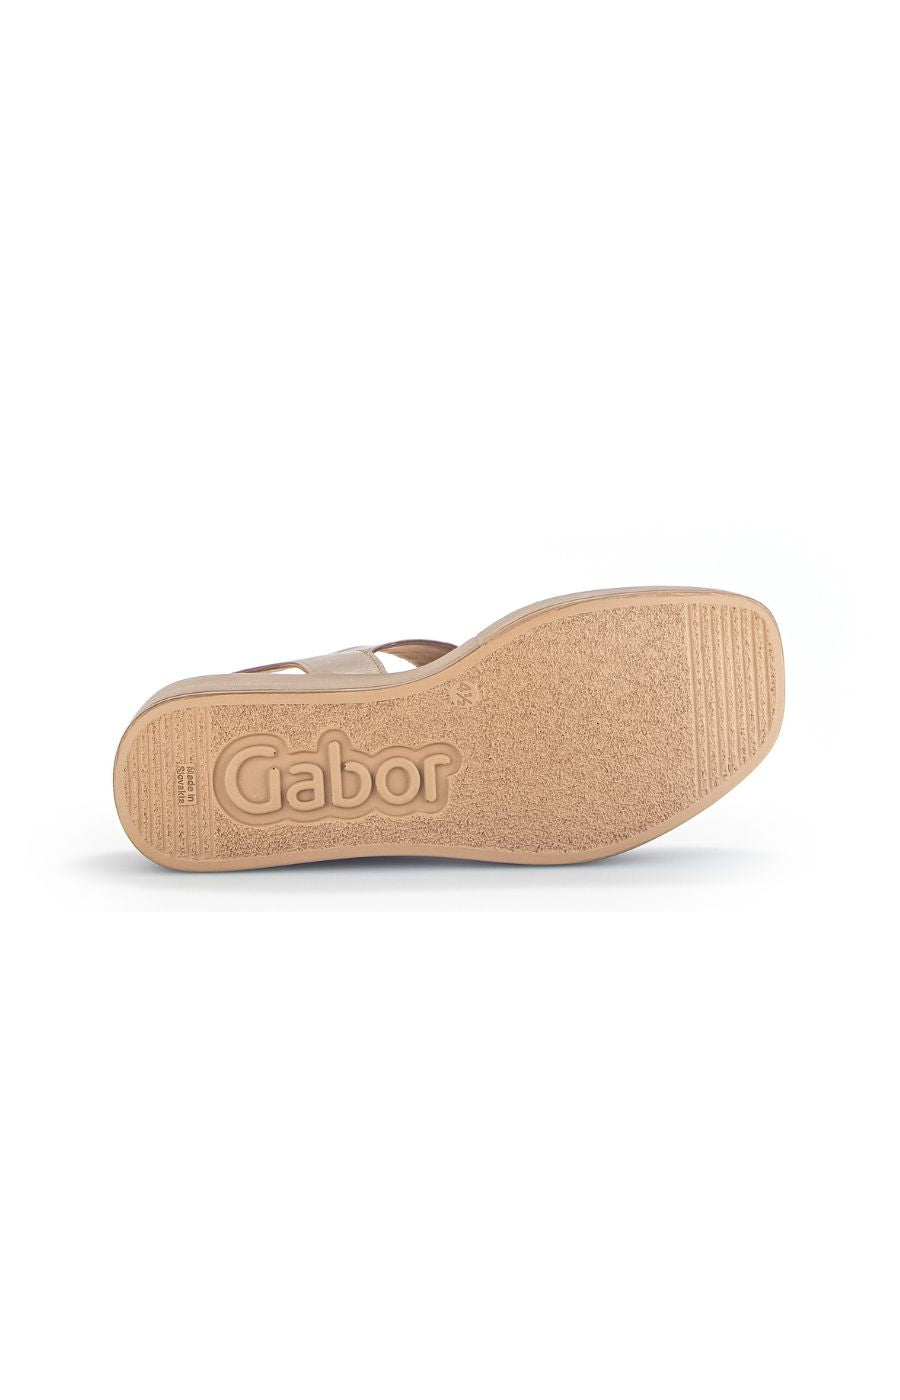 Gabor Buckle Wedge Sandal in Gold